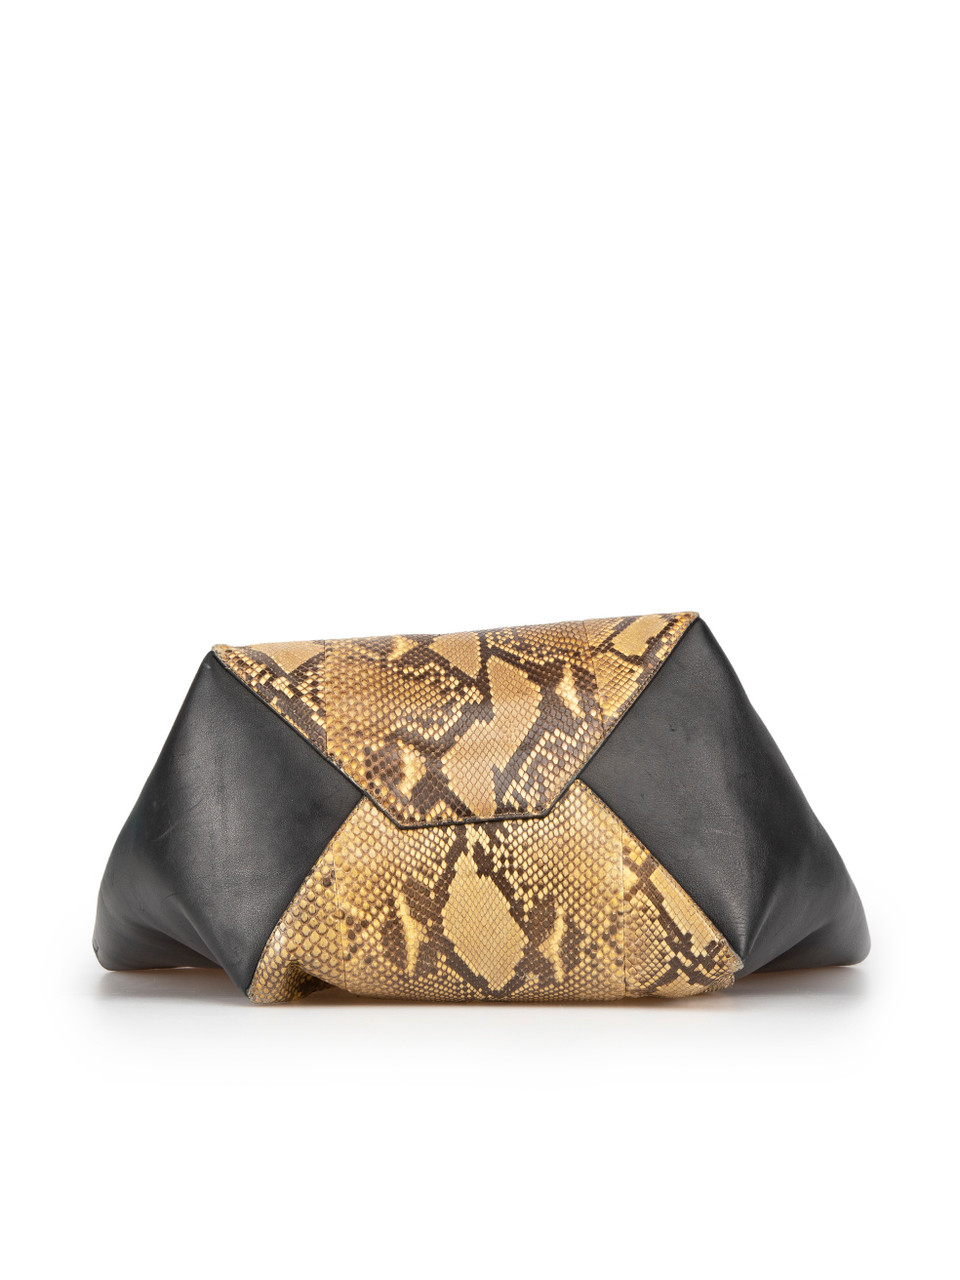 Céline Black Leather & Python Medium Phantom Cabas Bag